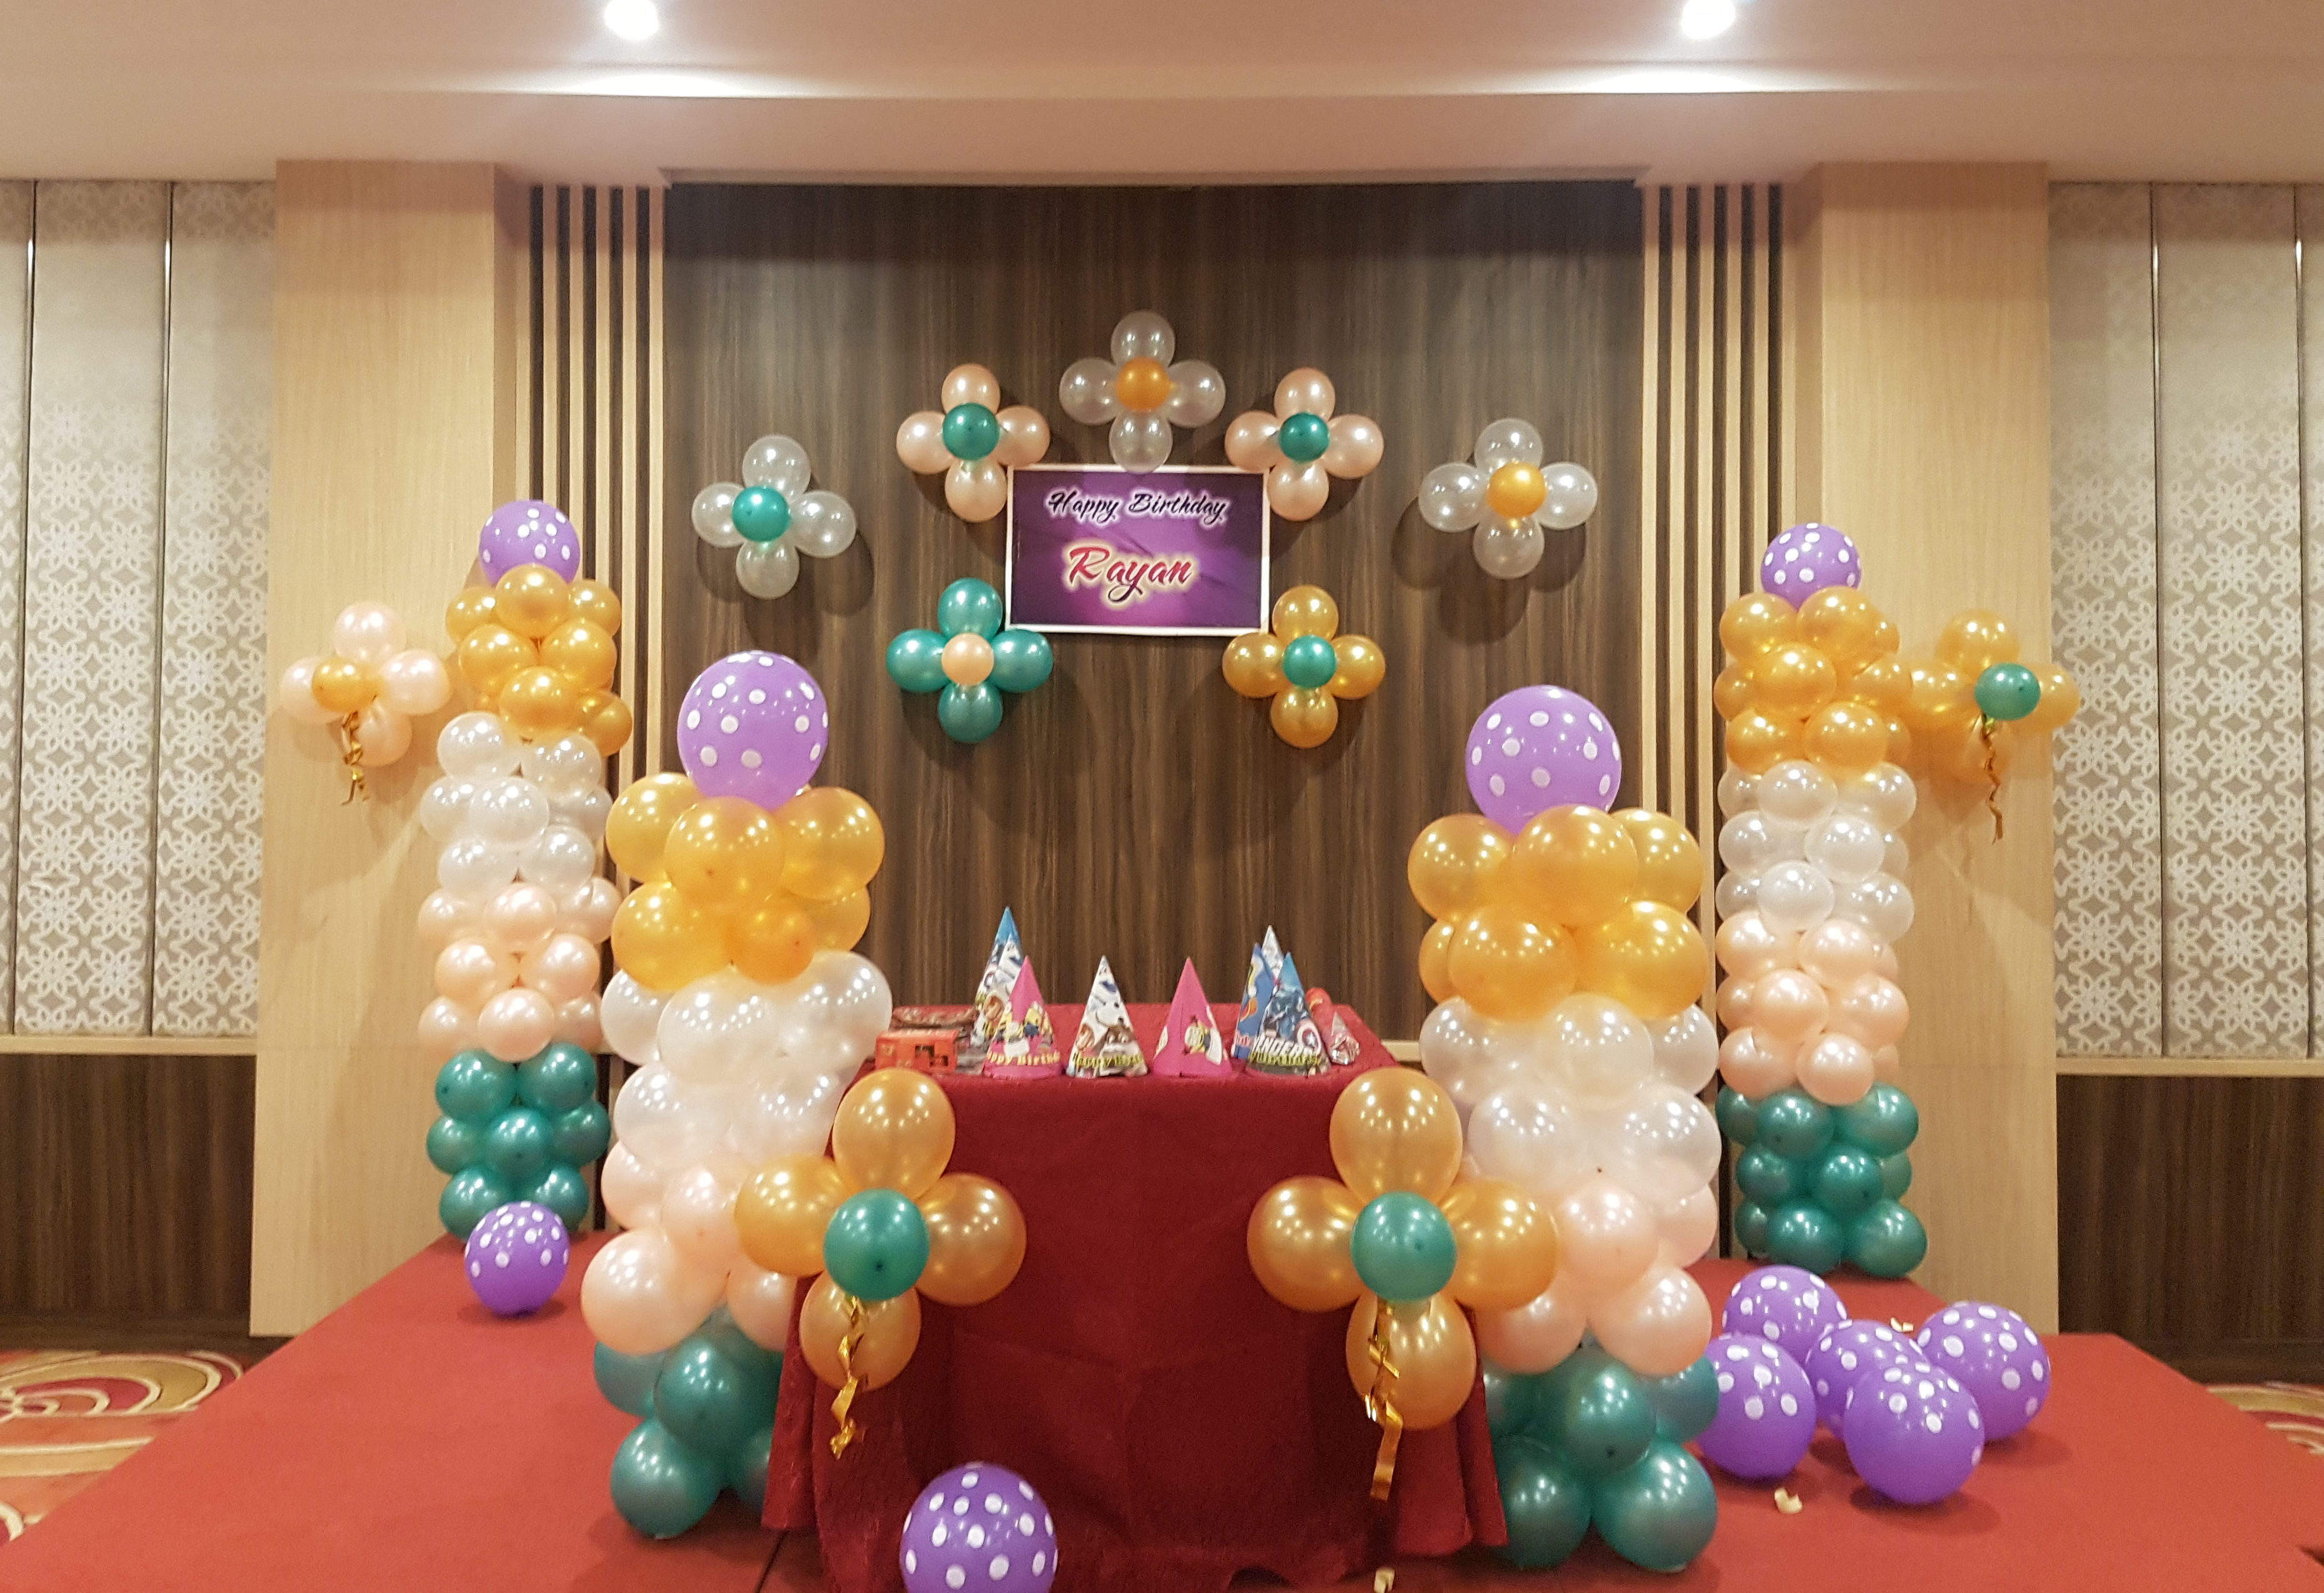 birthday party balloon decoration